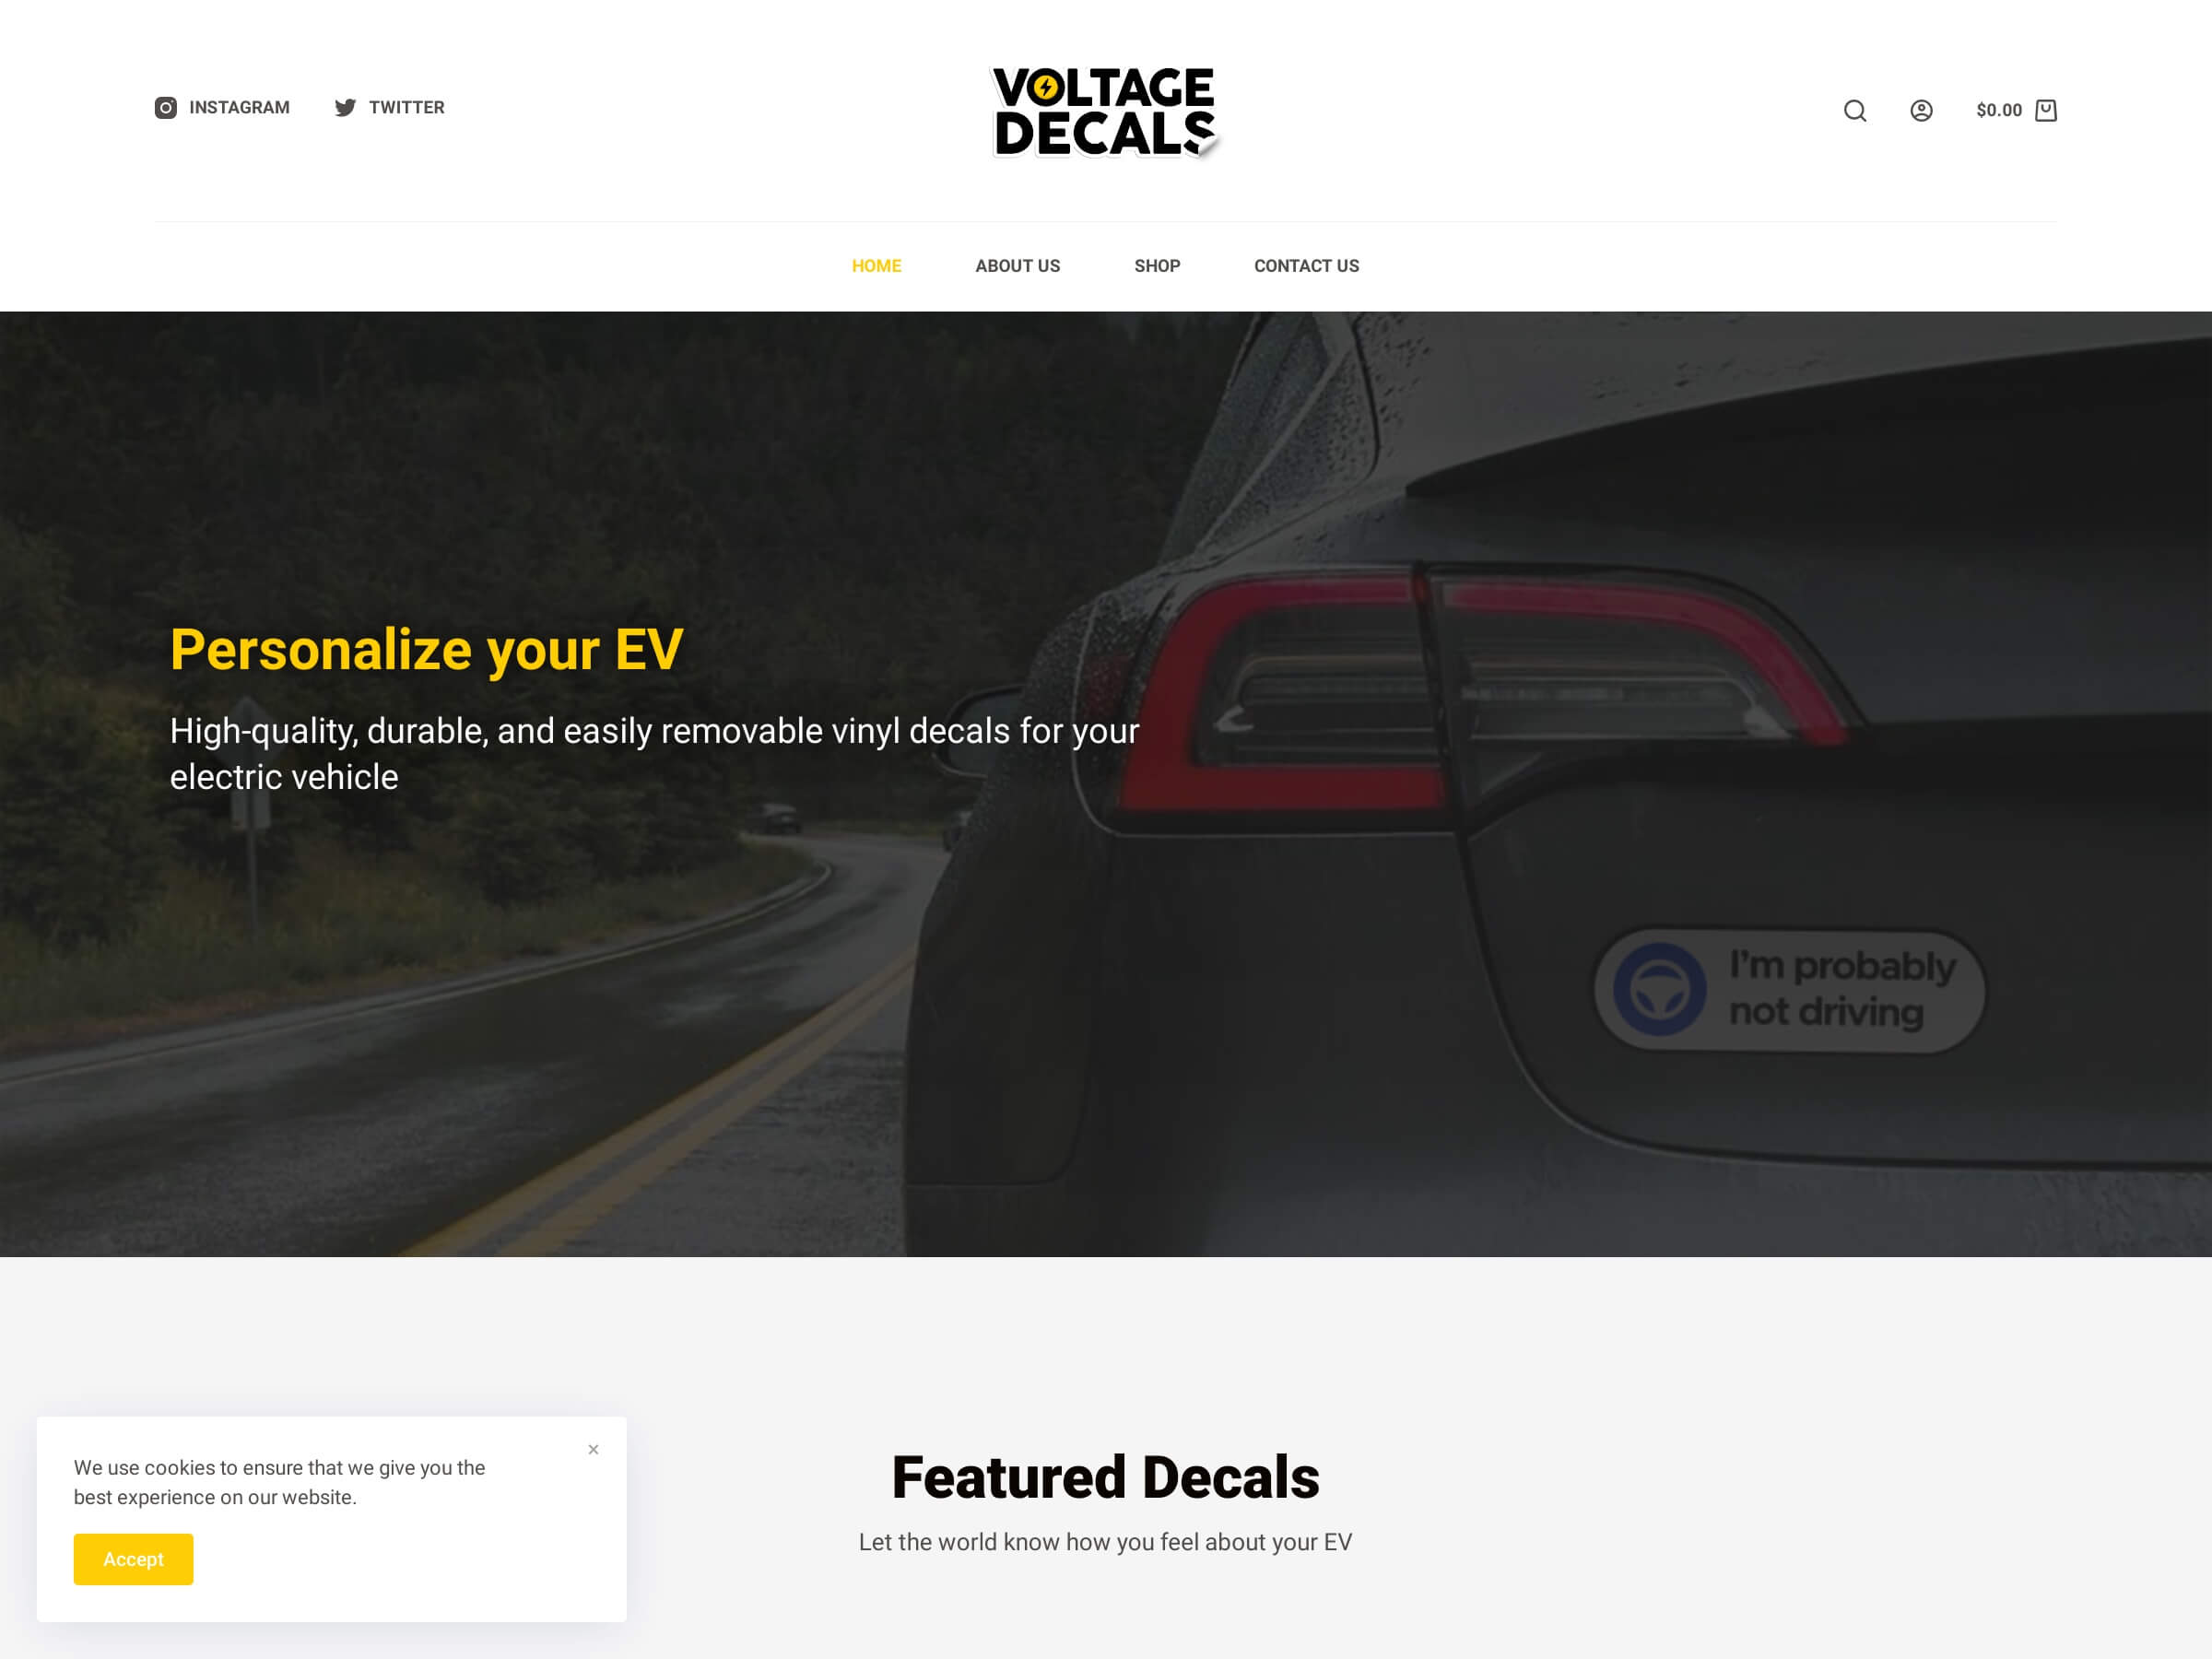 Voltage Decals - Personalize Your EV